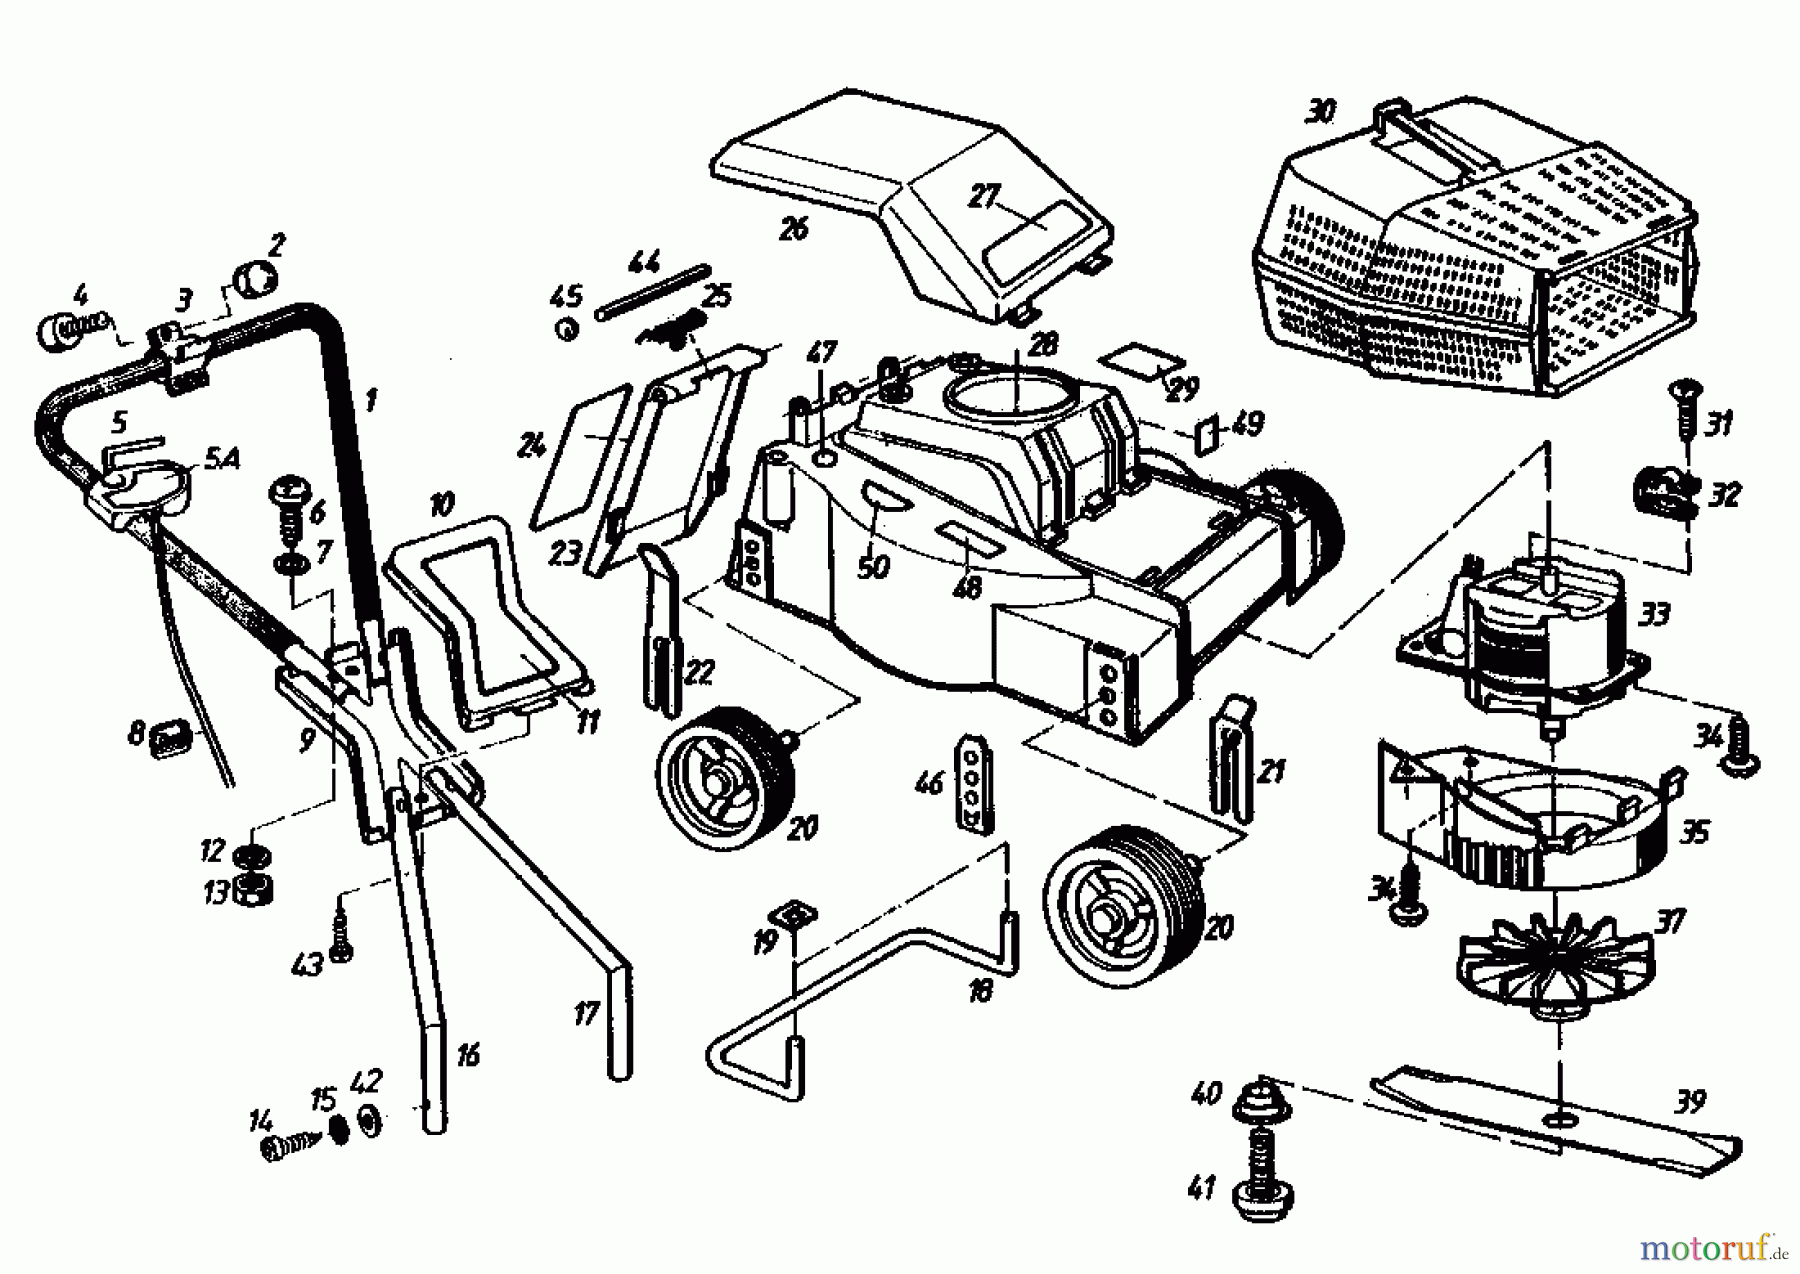  Gutbrod Electric mower HE 32 02872.02  (1985) Basic machine